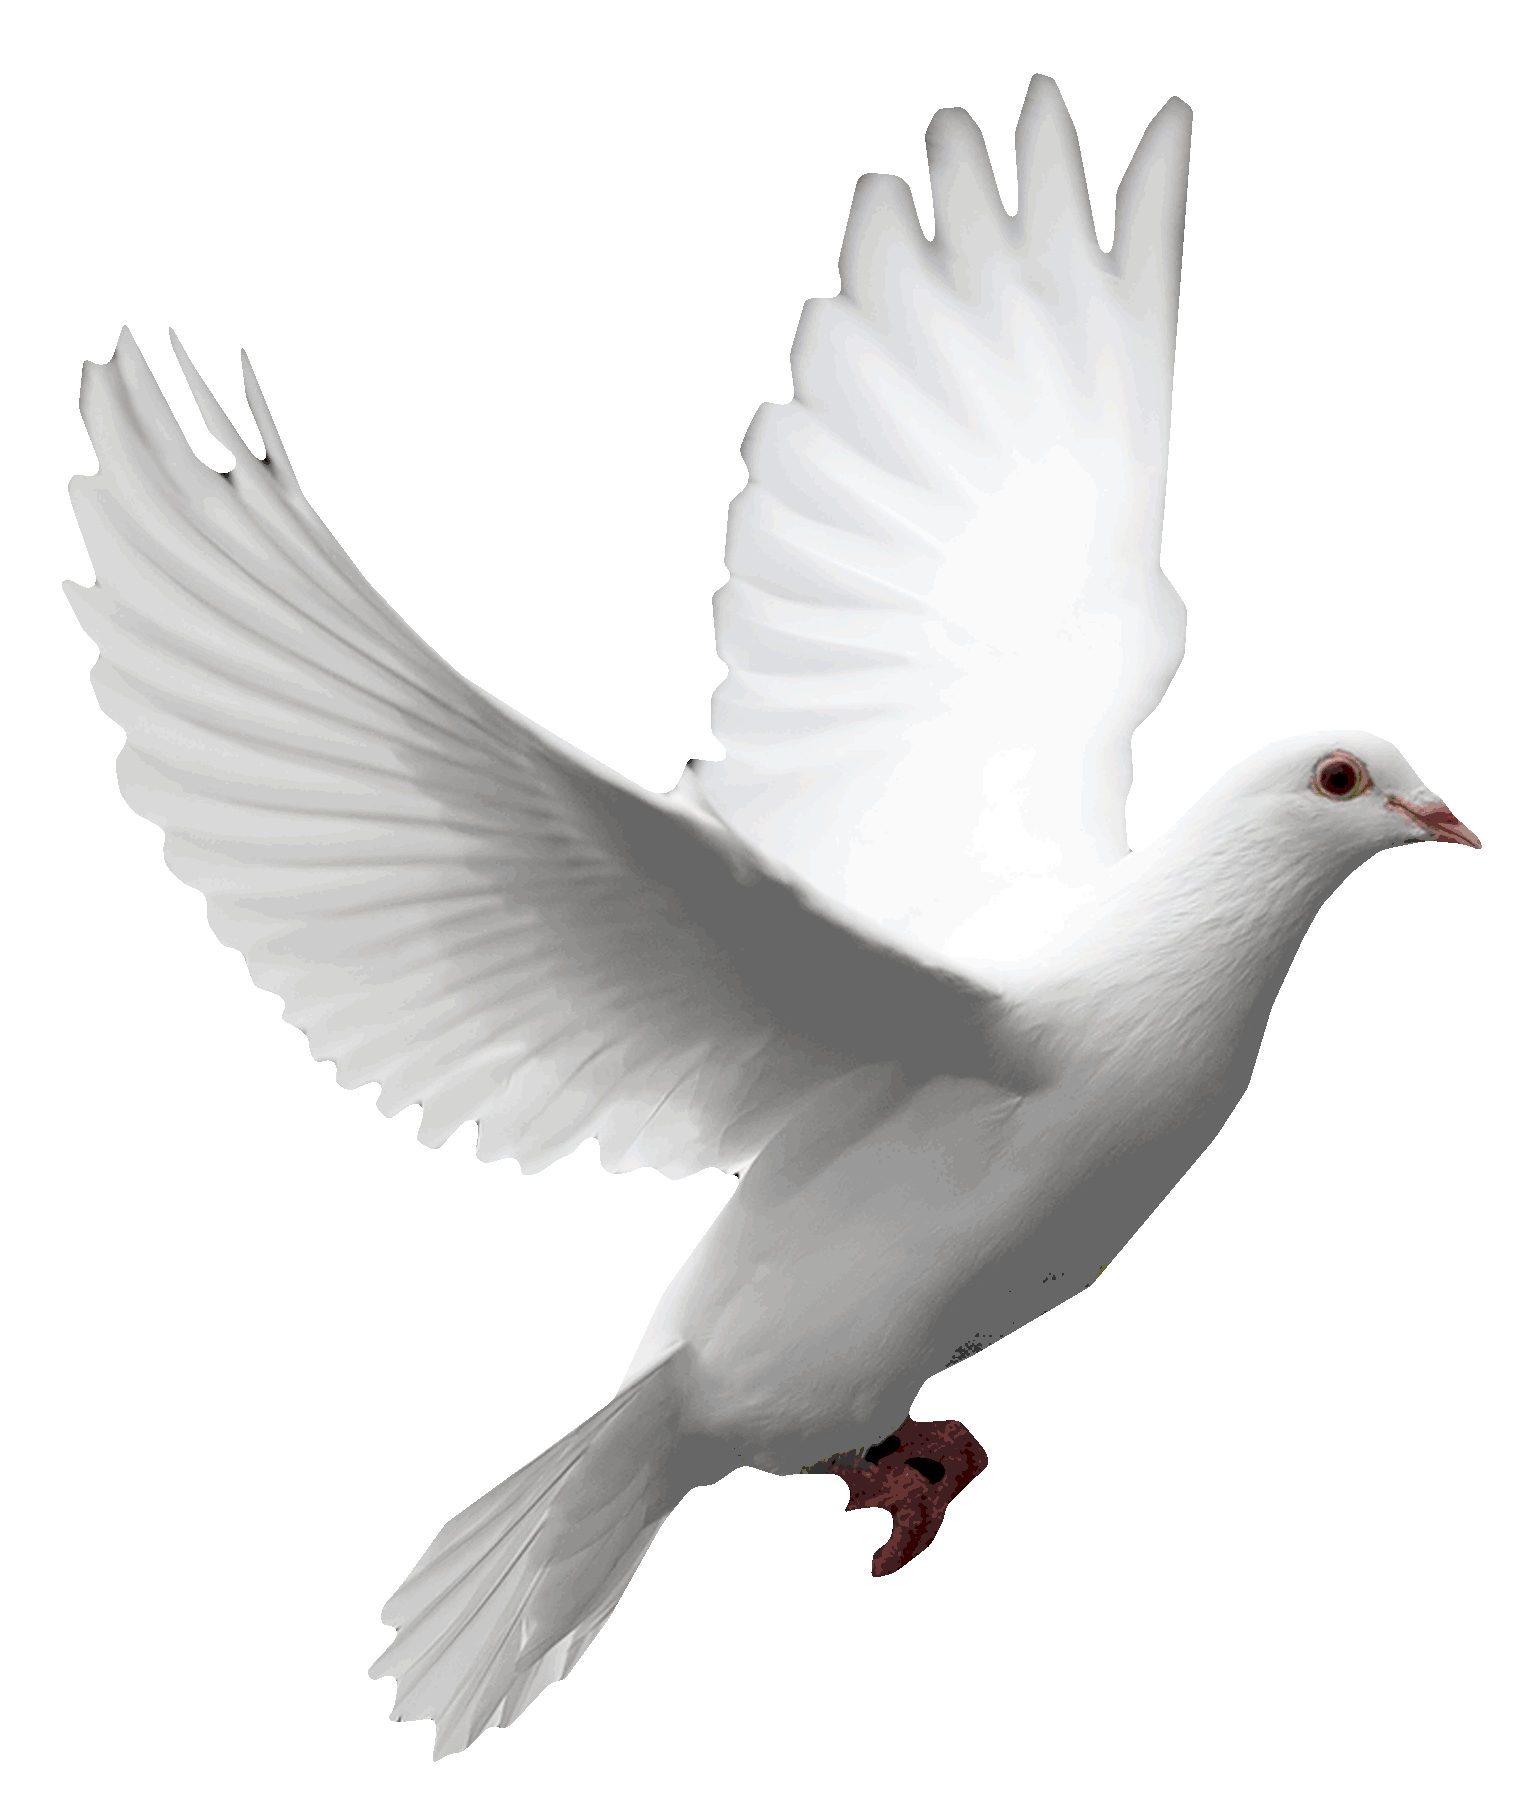 Pigeon clipart funeral dove. Hands of light healing